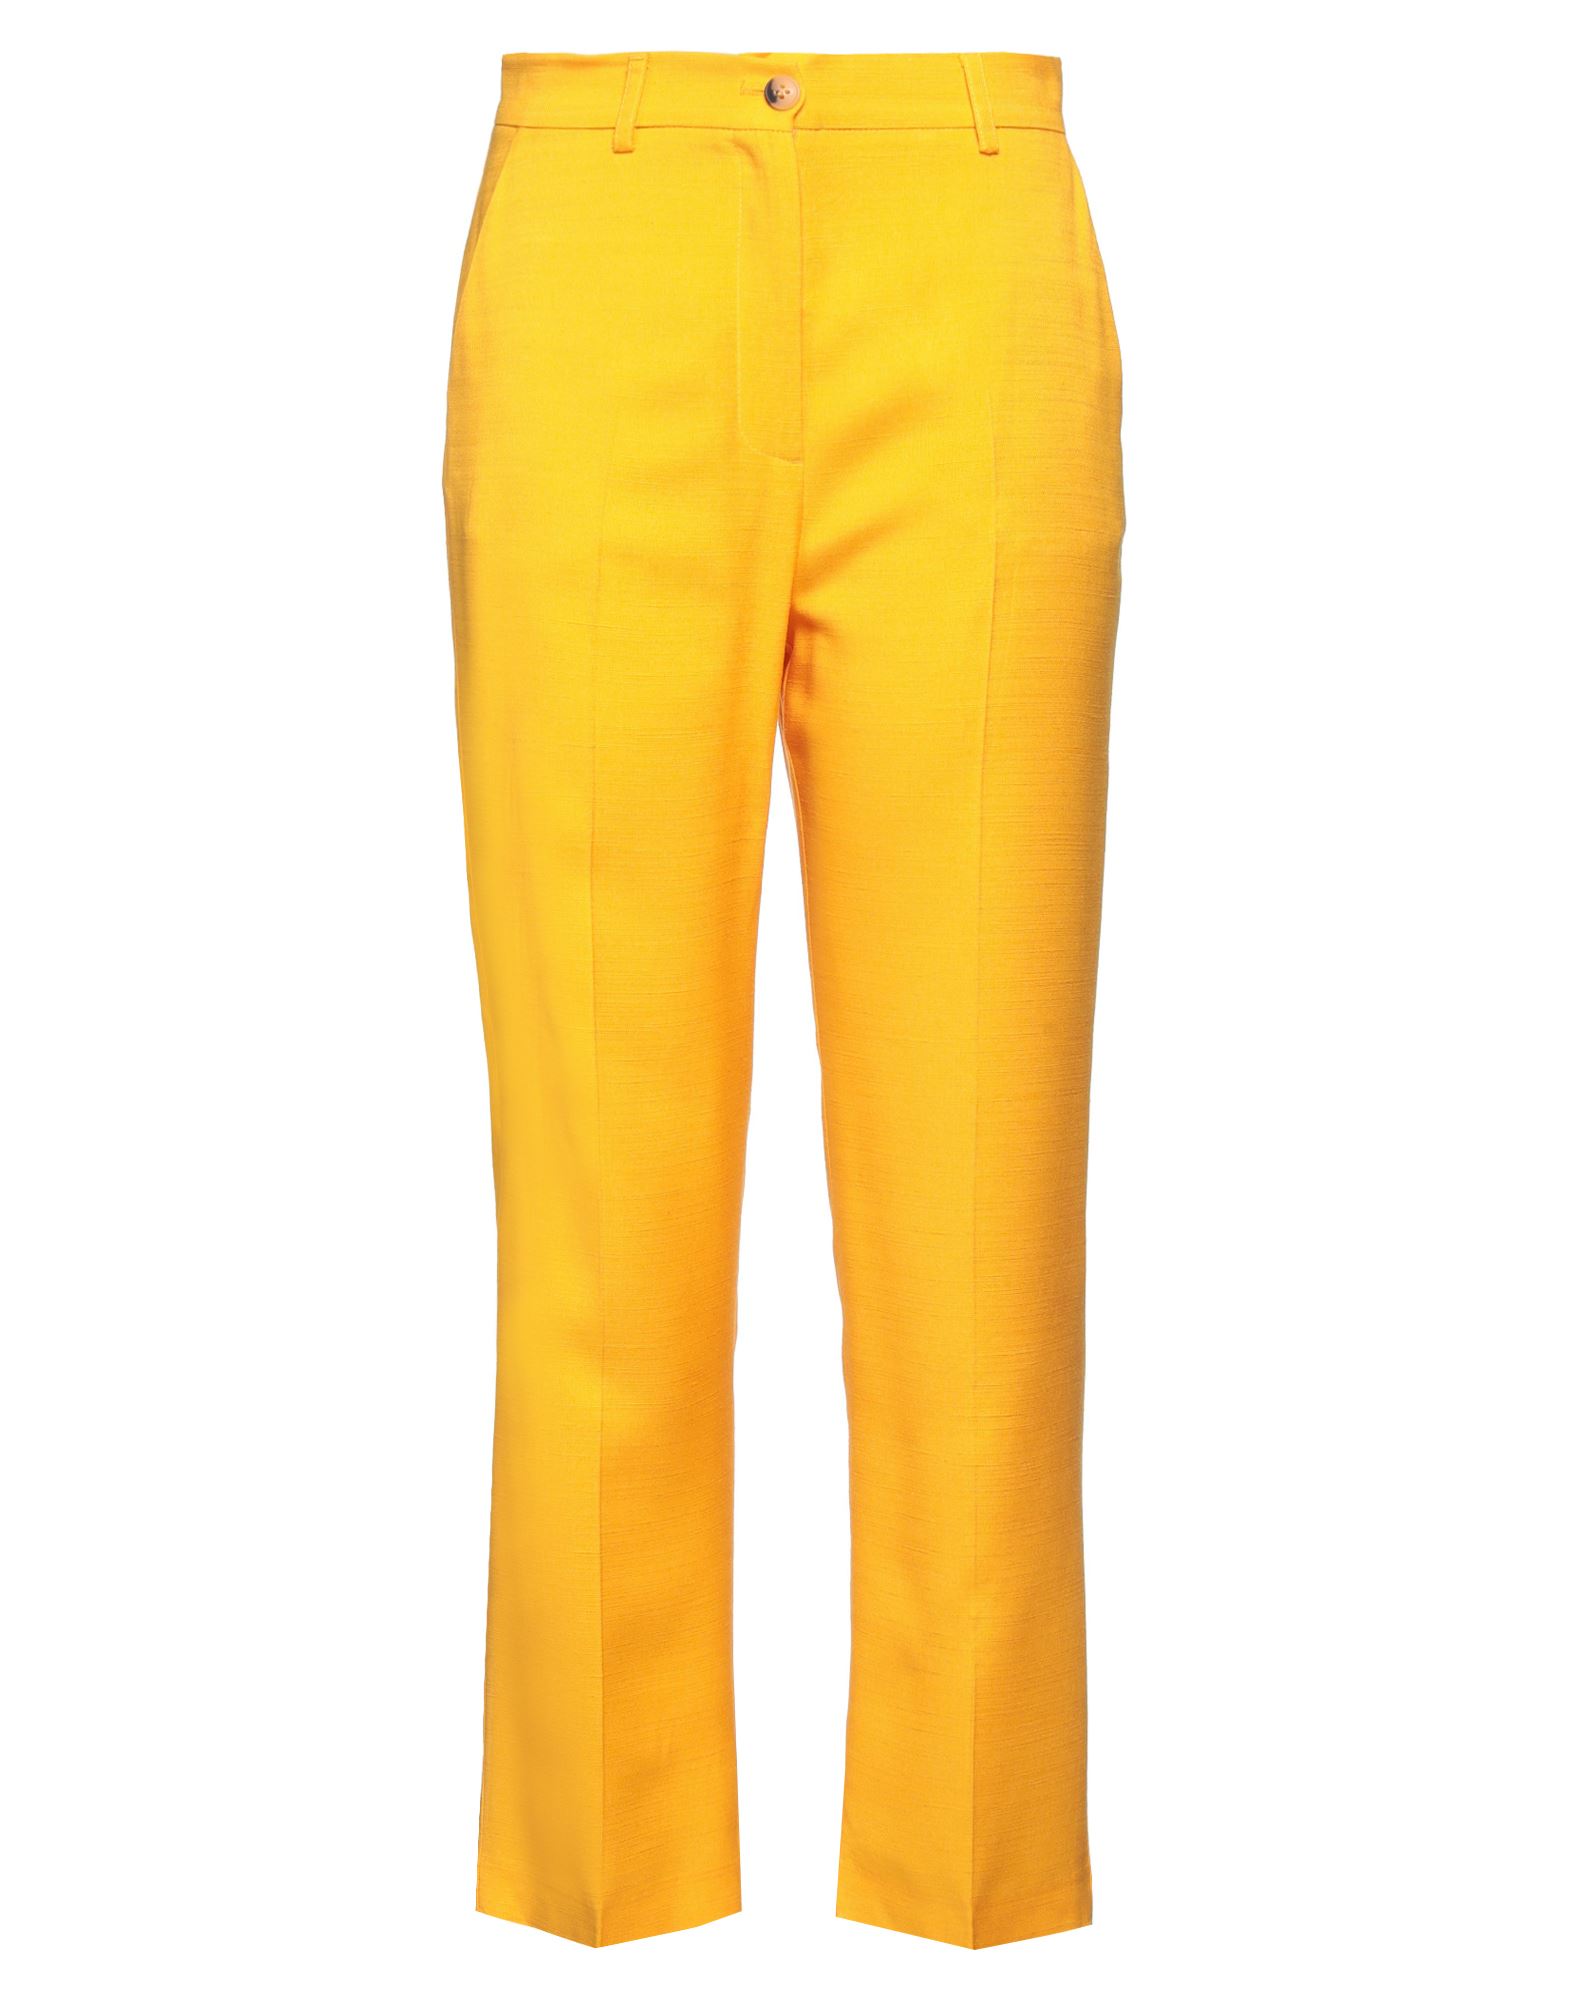 Rue 8isquit Pants In Yellow